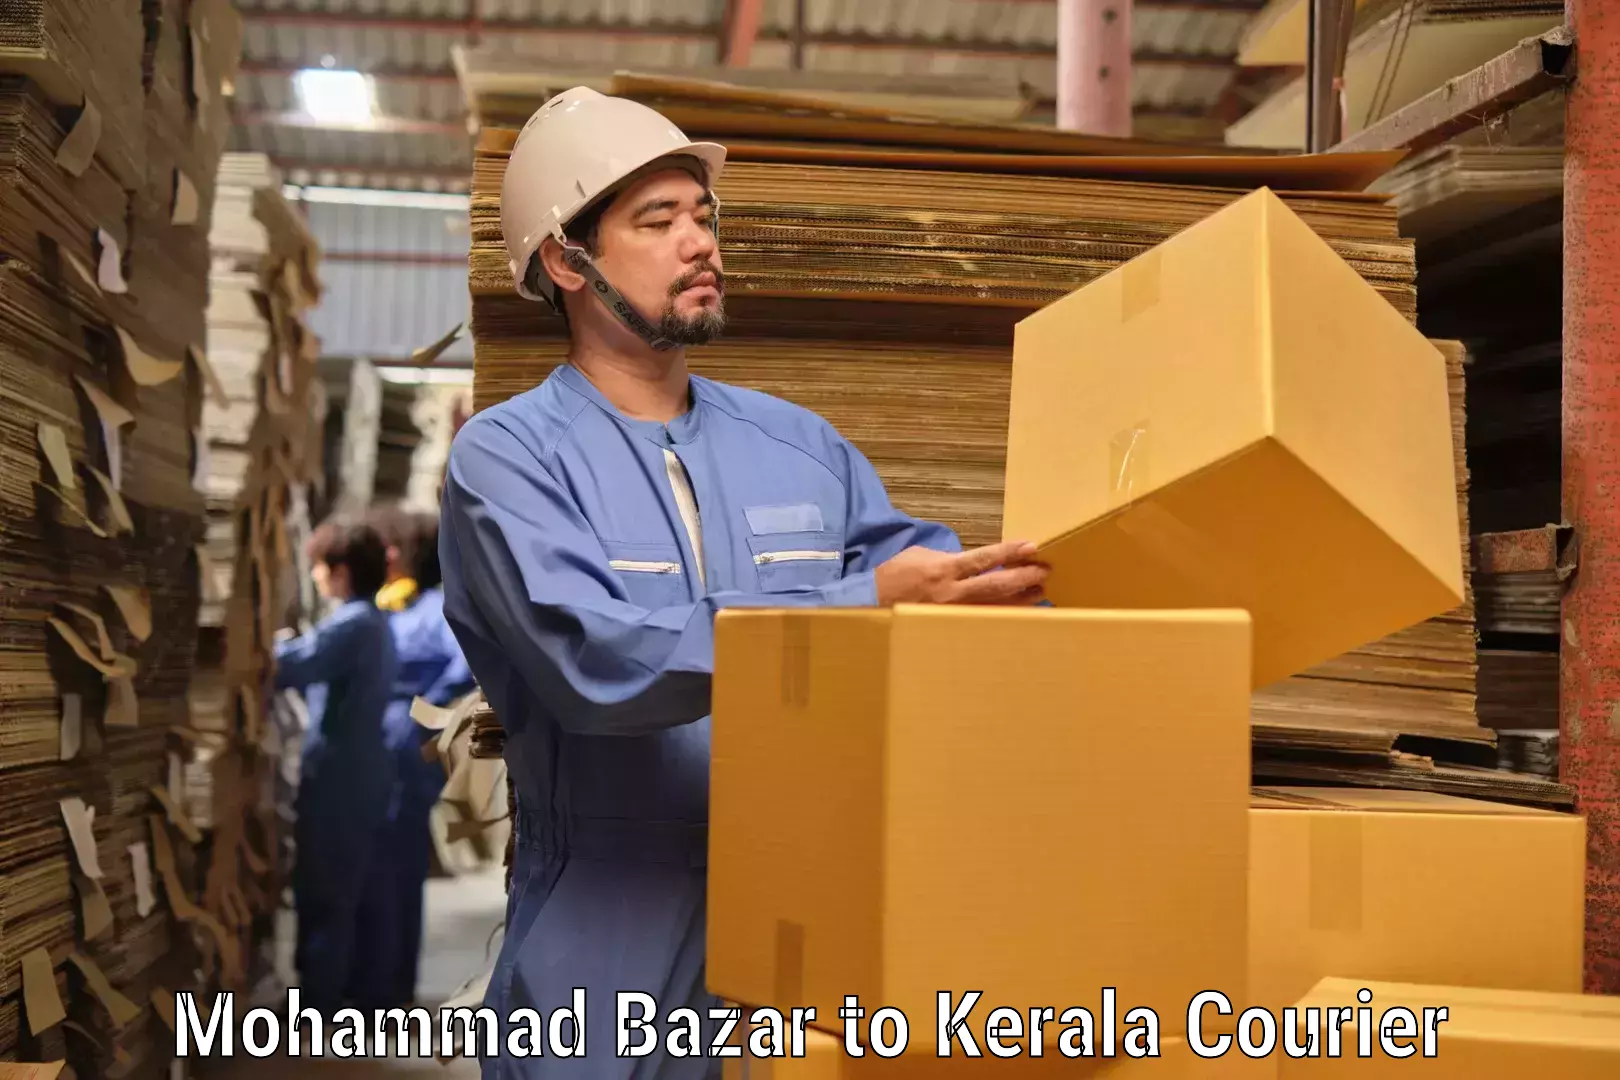 Digital courier platforms Mohammad Bazar to Kerala